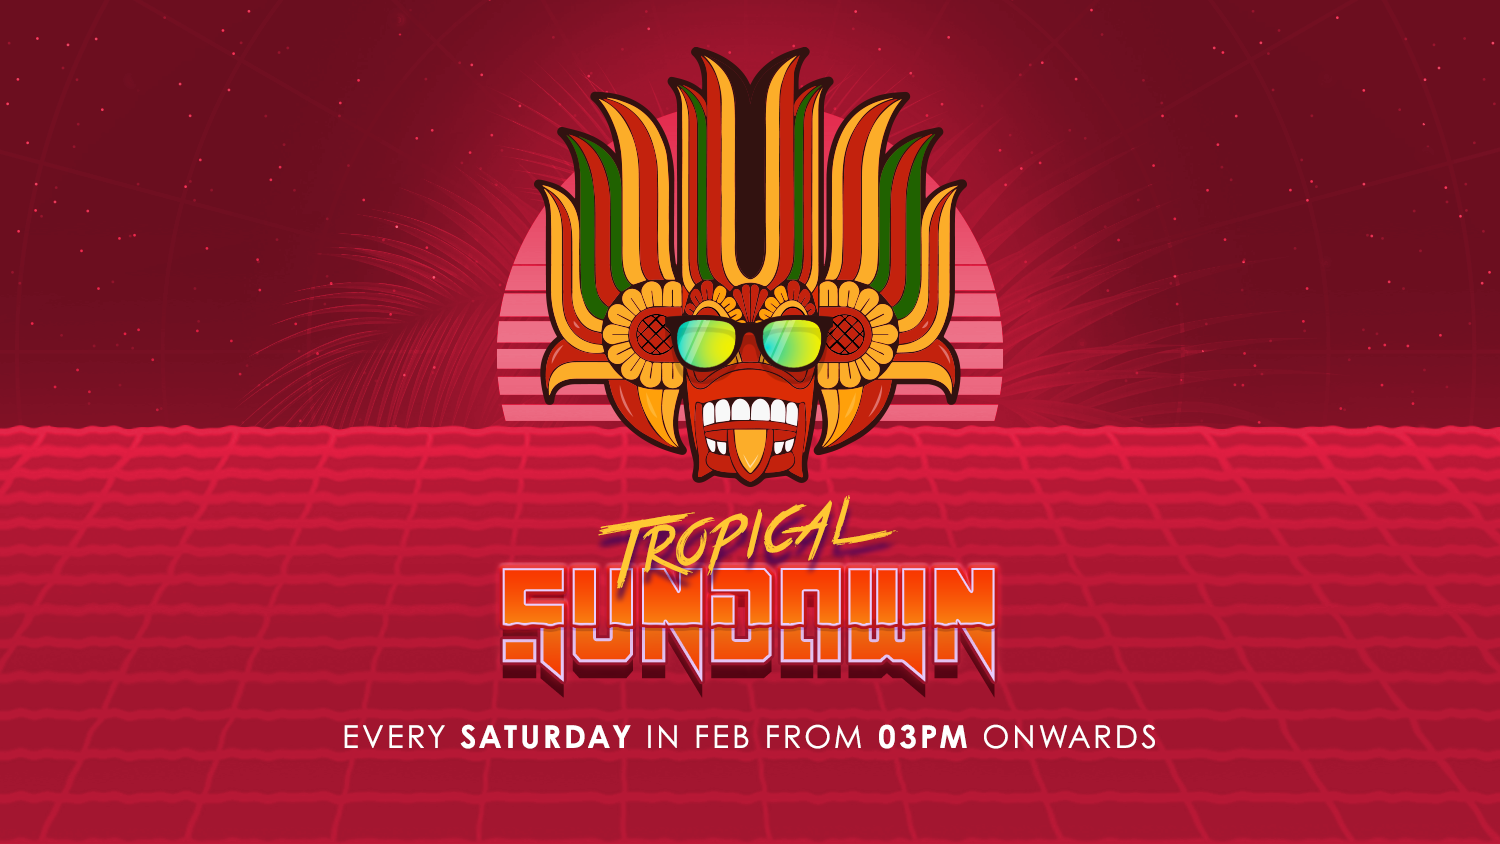 Saturday Tropical Sundown Night Celebrations with W15 DJ and Seafood